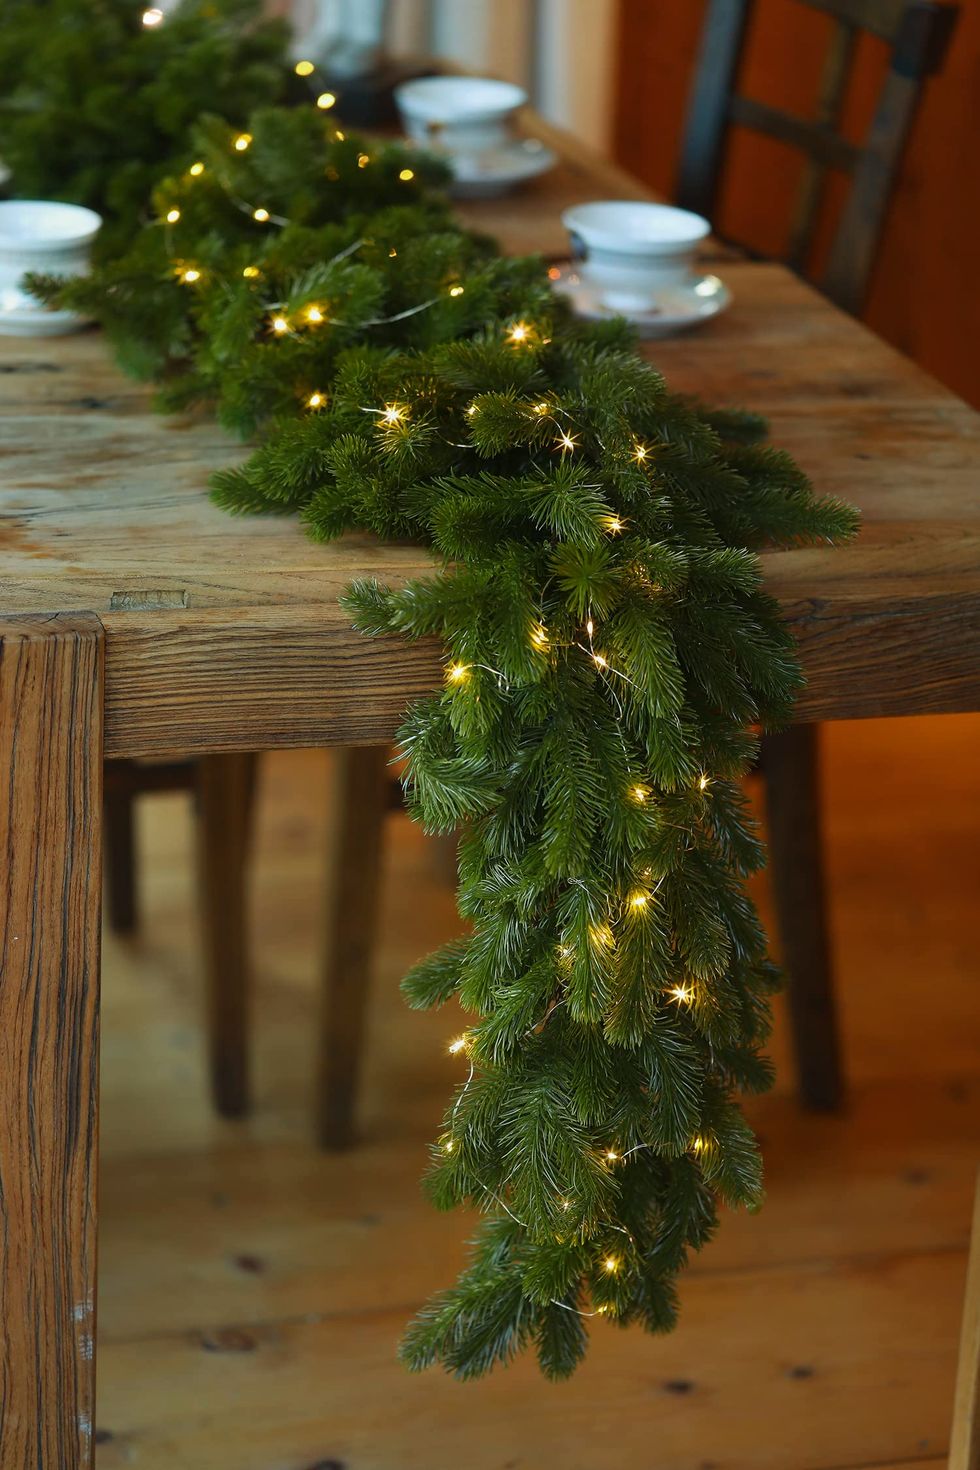 6pcs wooden Christmas Ball Christmas Tree Ornaments Black Red Buffalo Plaid  With Greenery Shatterproof Xmas Hanging Decoration